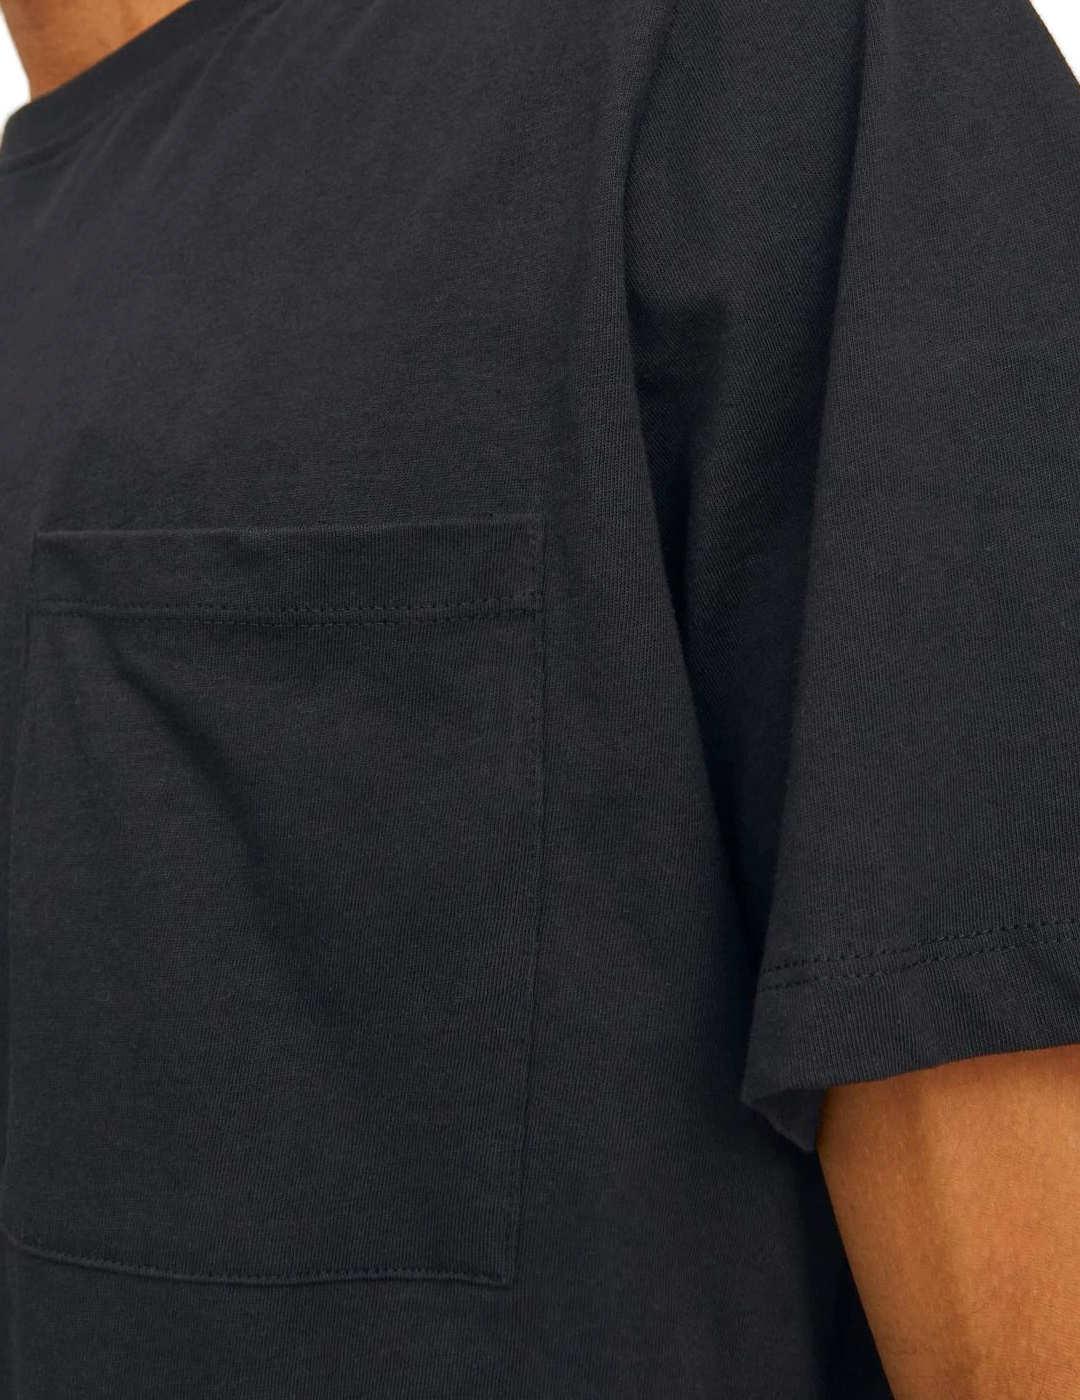 Camiseta Jack&Jones Noa negra manga corta para hombre